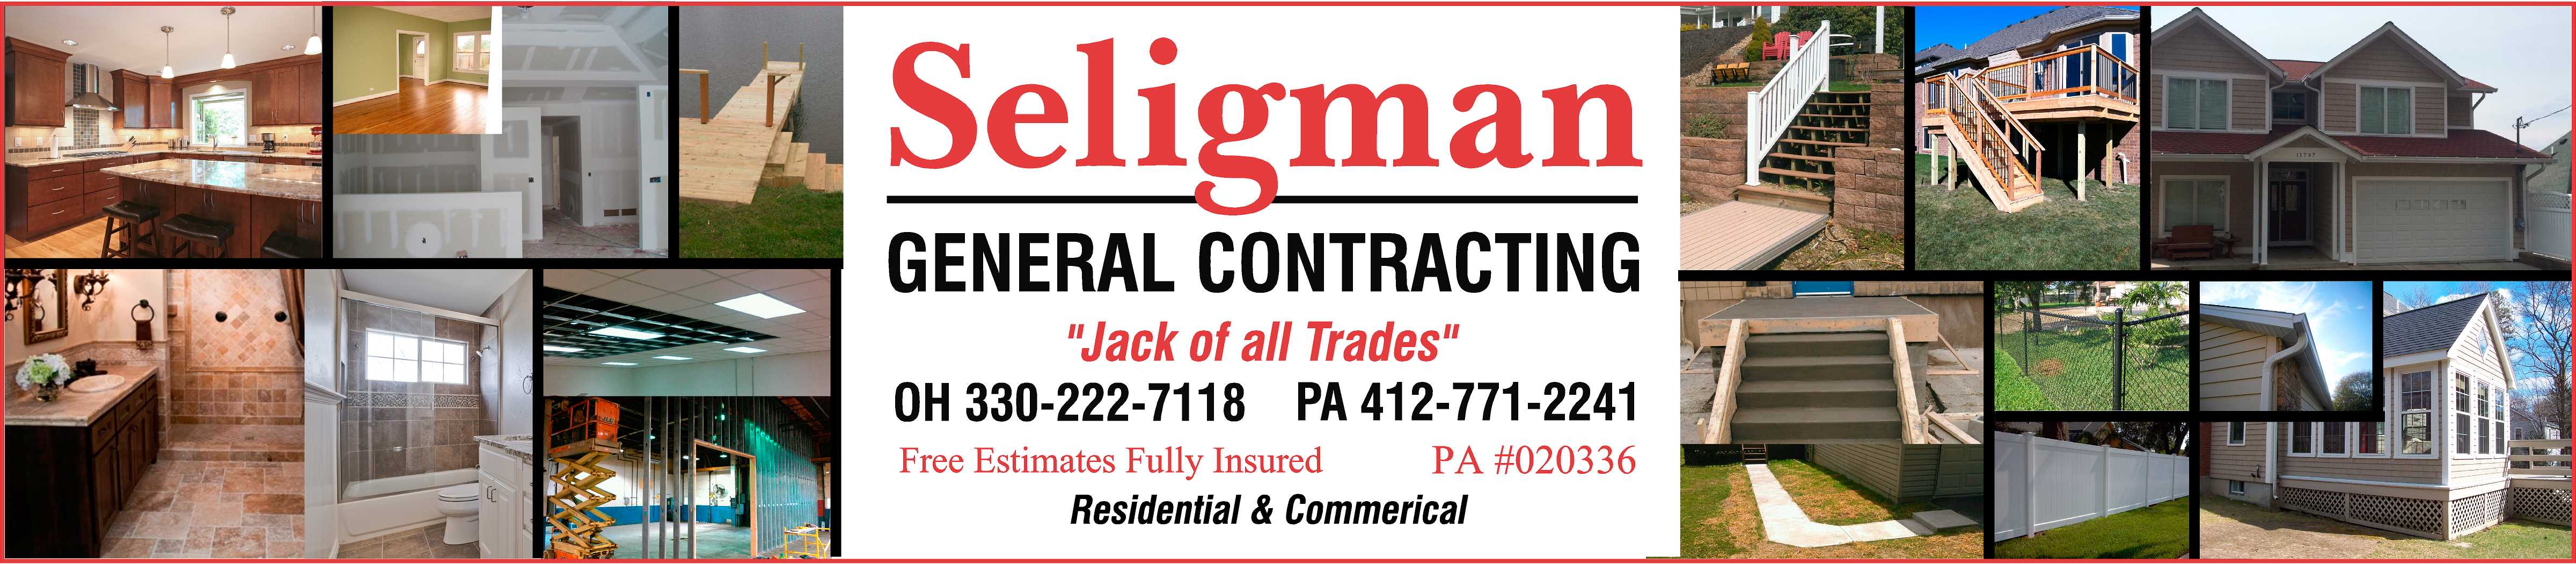 Seligman General Contracting Logo